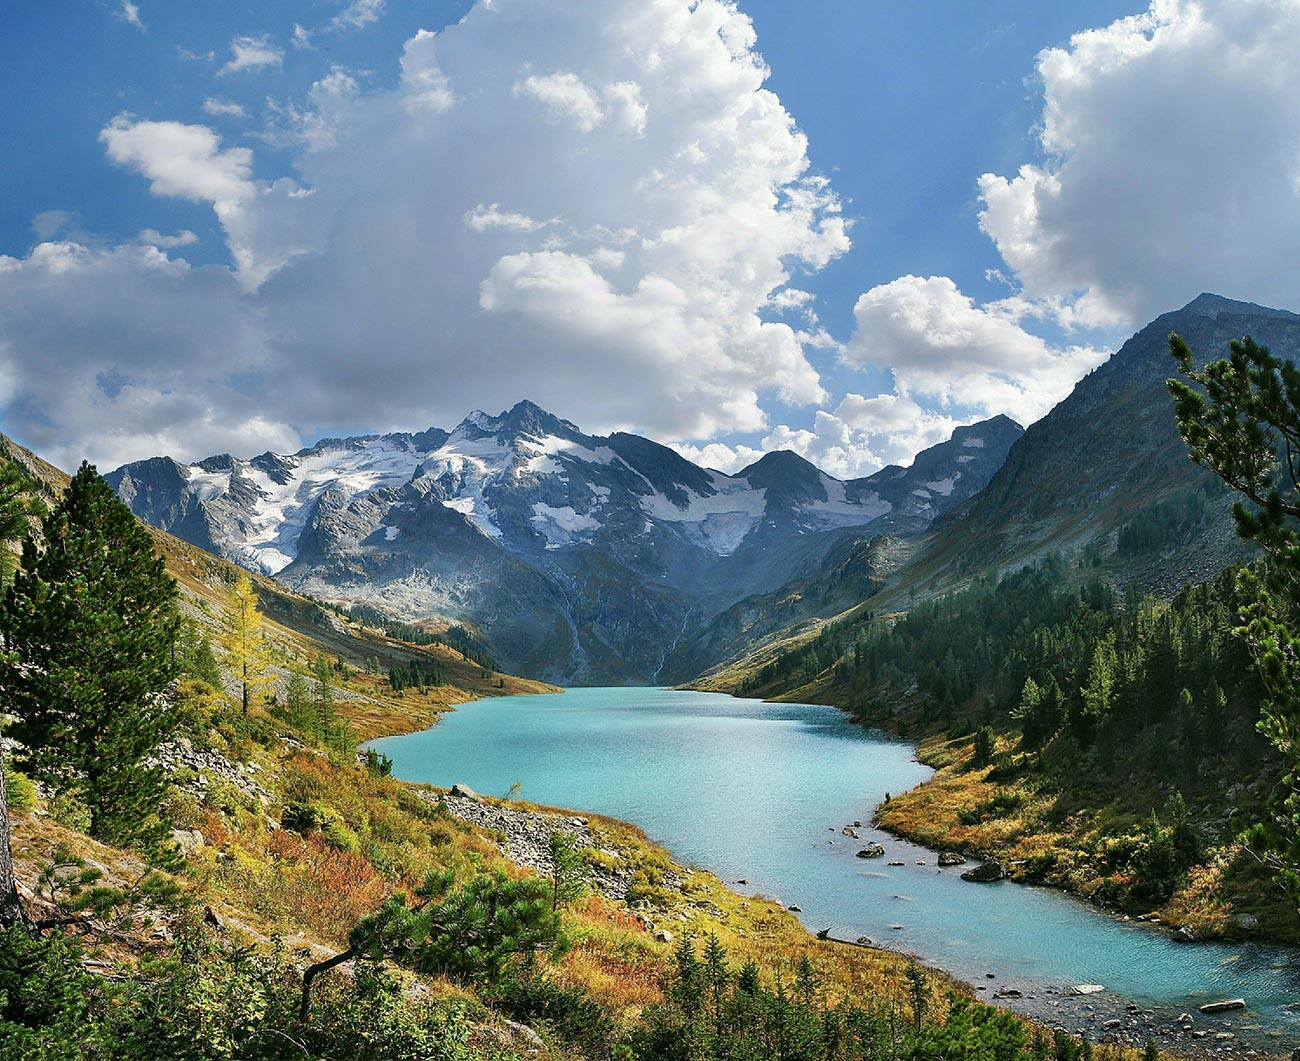 Rusija, Republika Altaj, Katunski greben. Multinska jezera